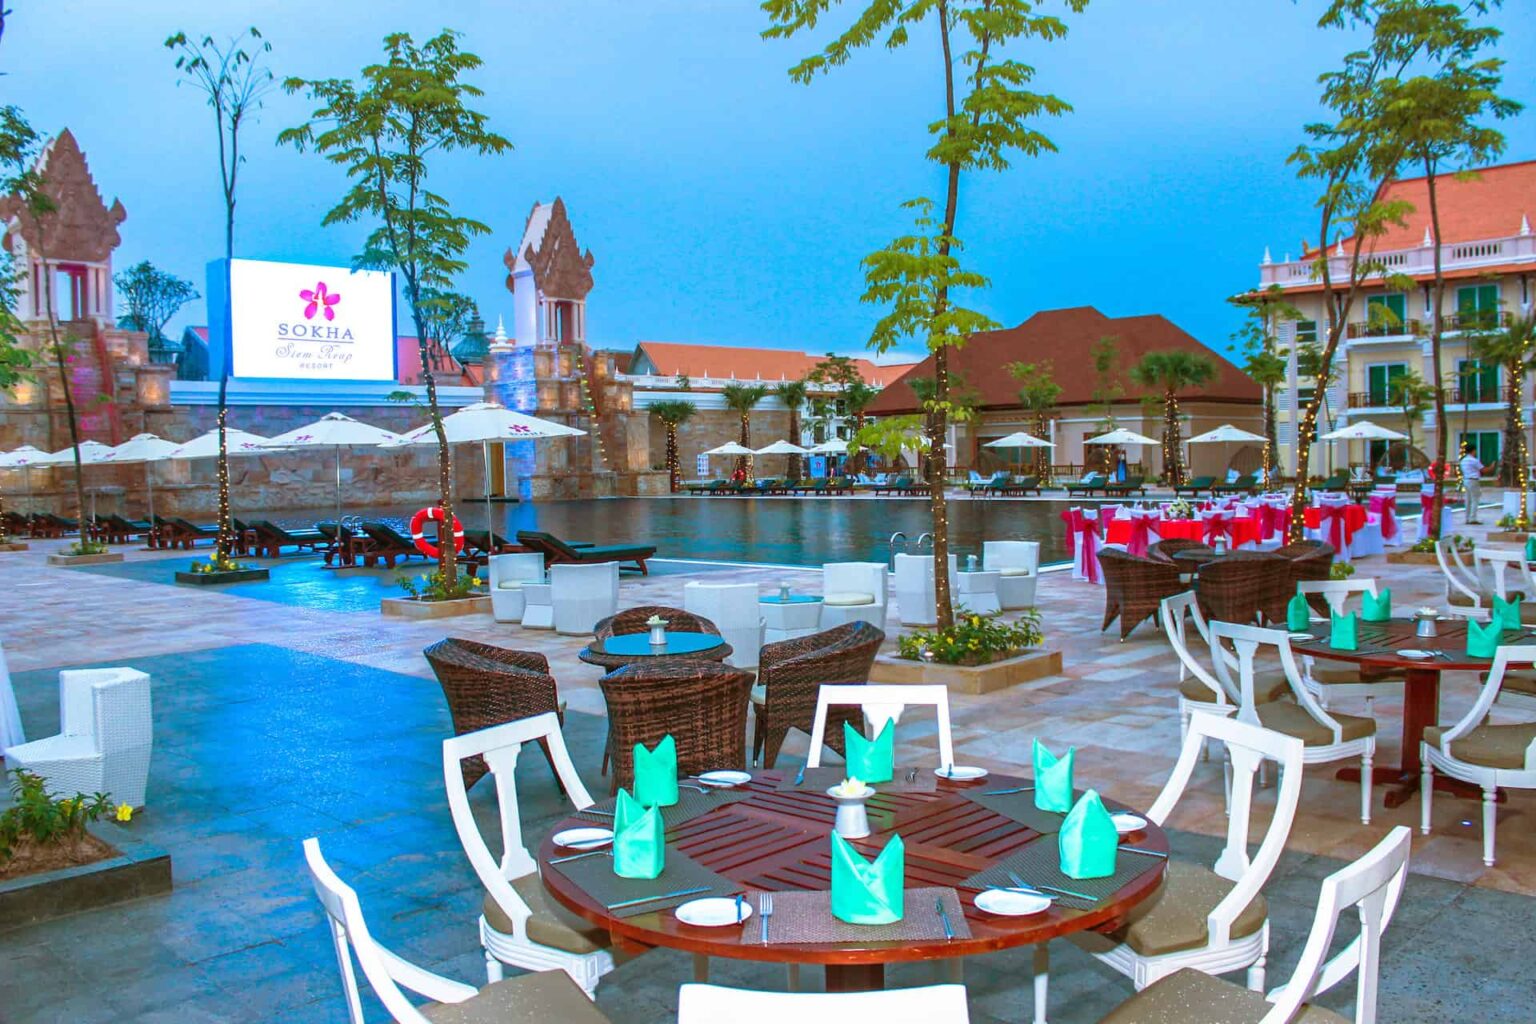 Sokha Siem Reap Resort outdoor event next to the salt water pool